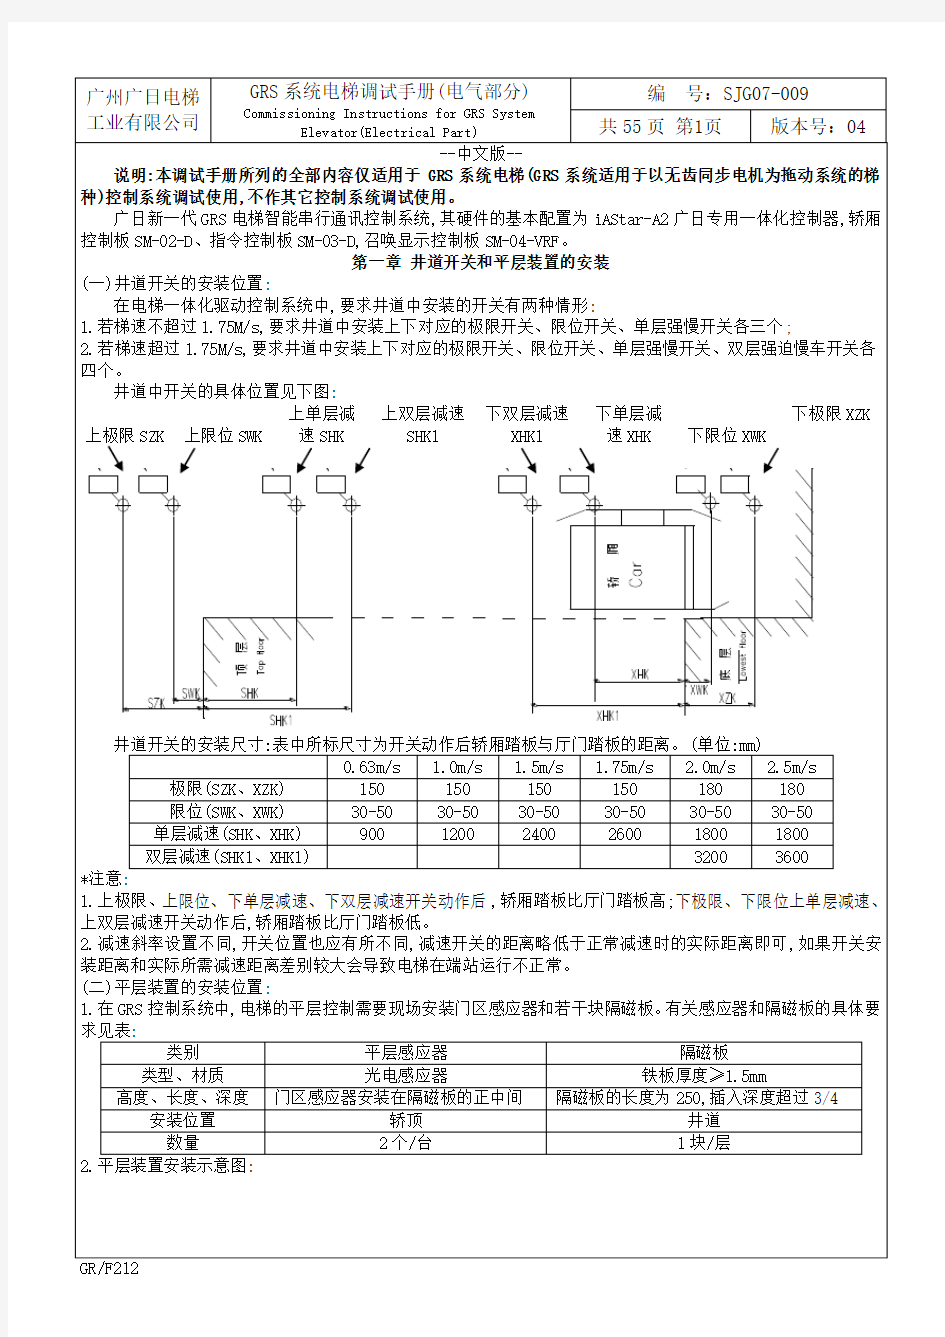 GRS系统电梯调试手册(电气部分)